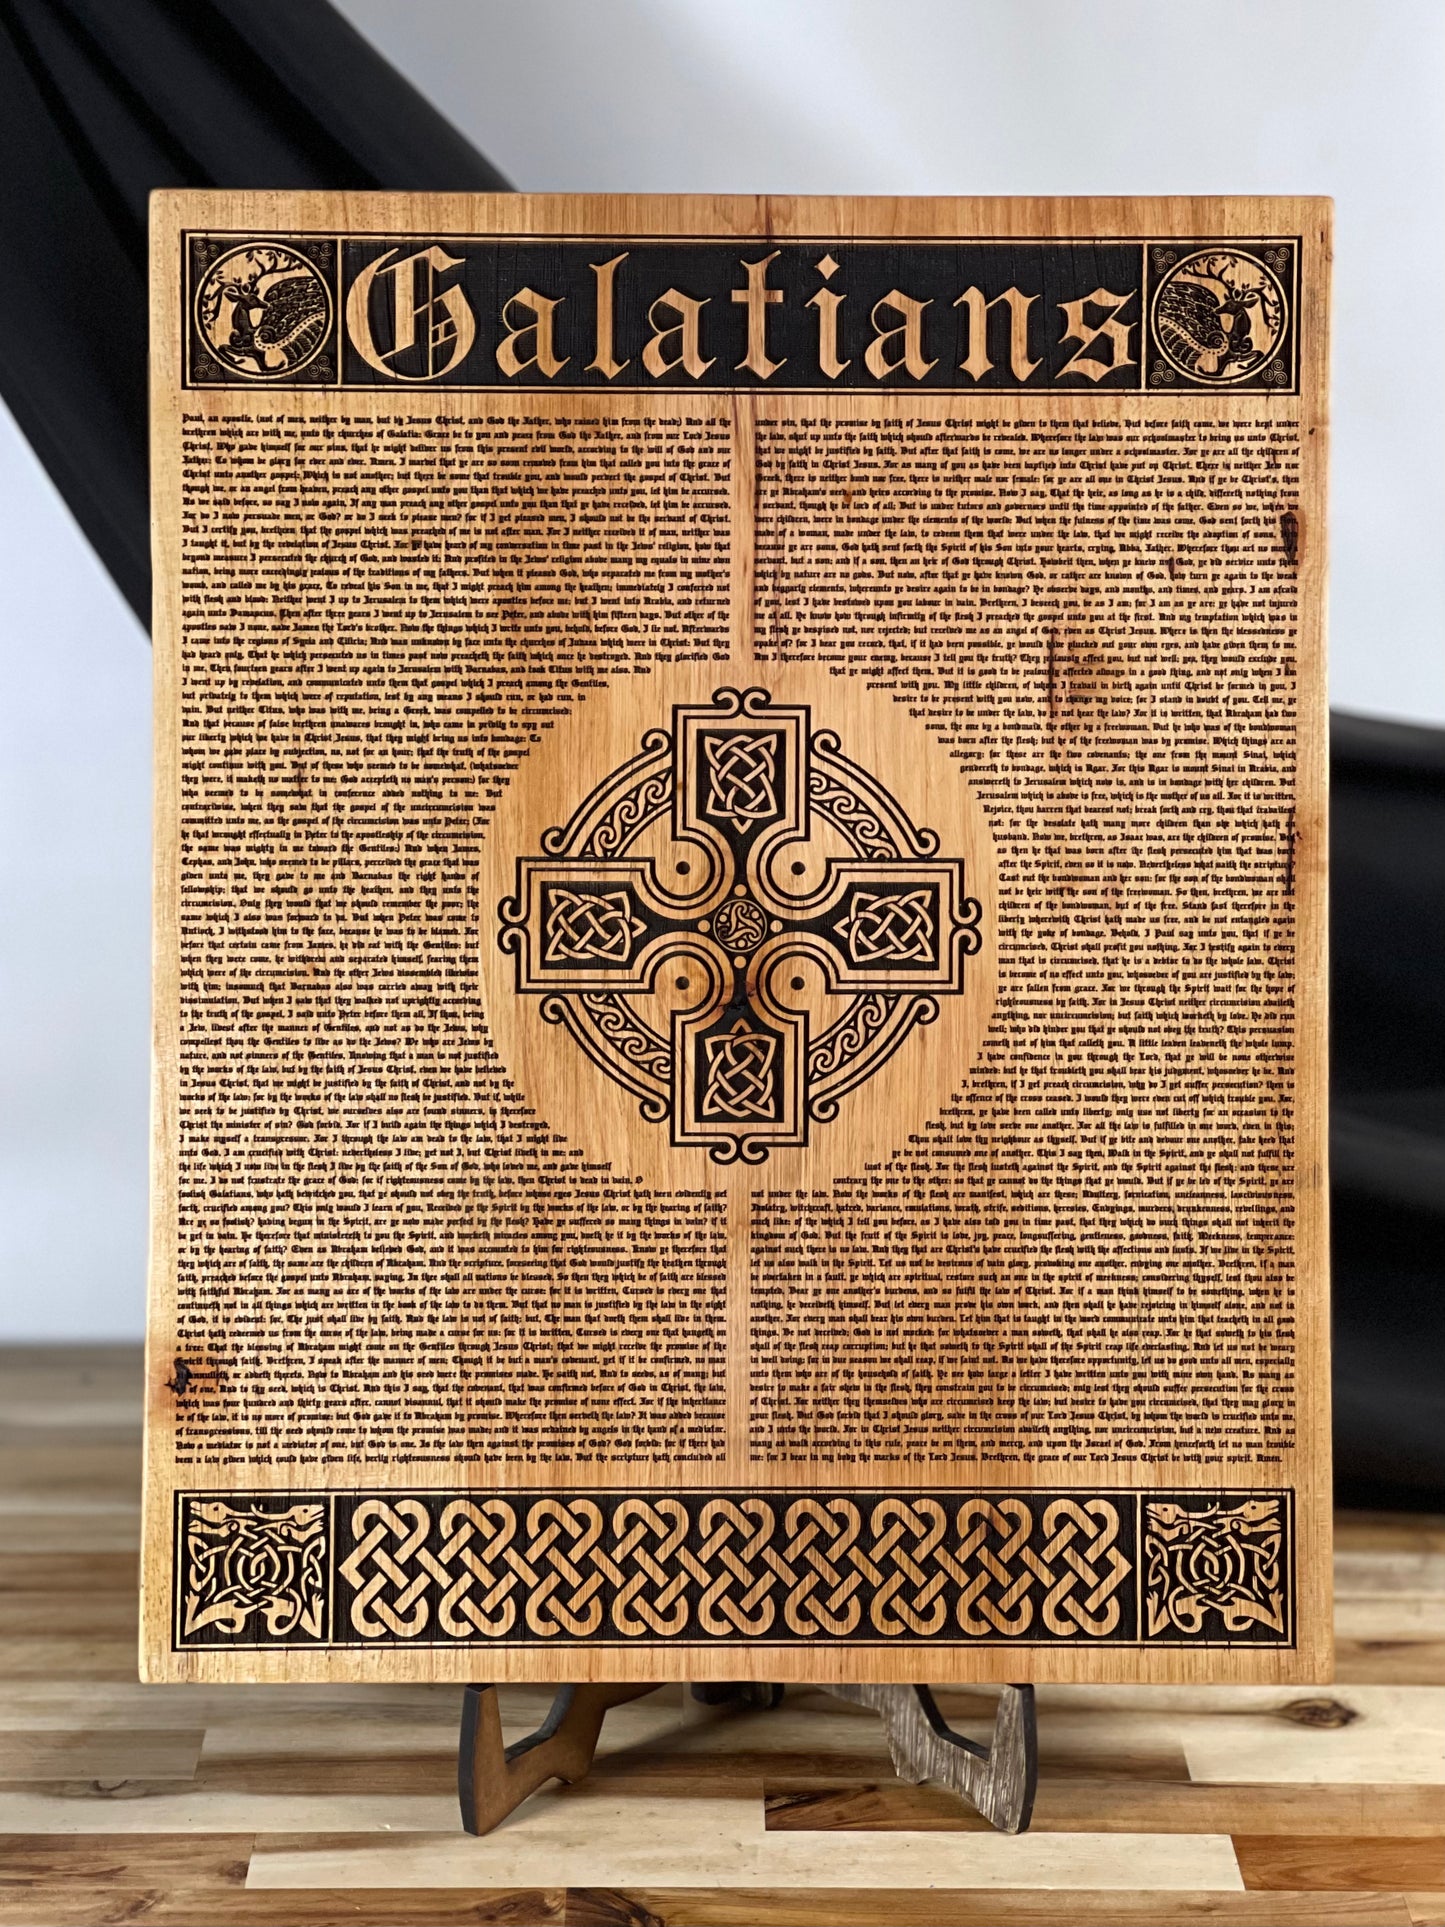 The Epistle of Galatians